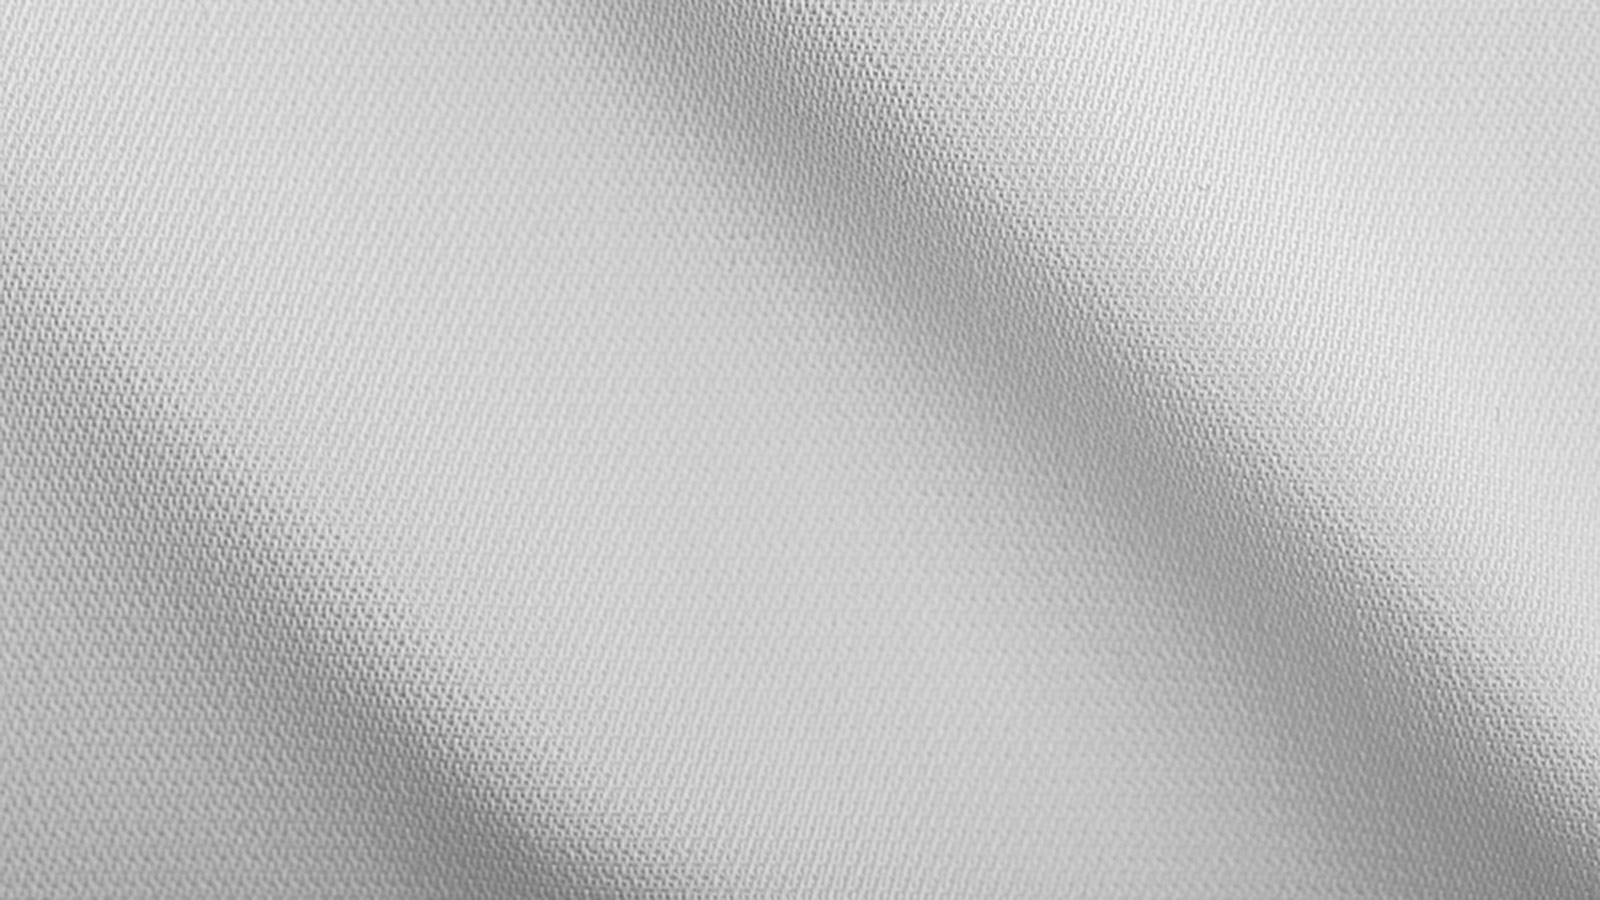 Luminex C-Stat HYDRO Fabric | Klopman